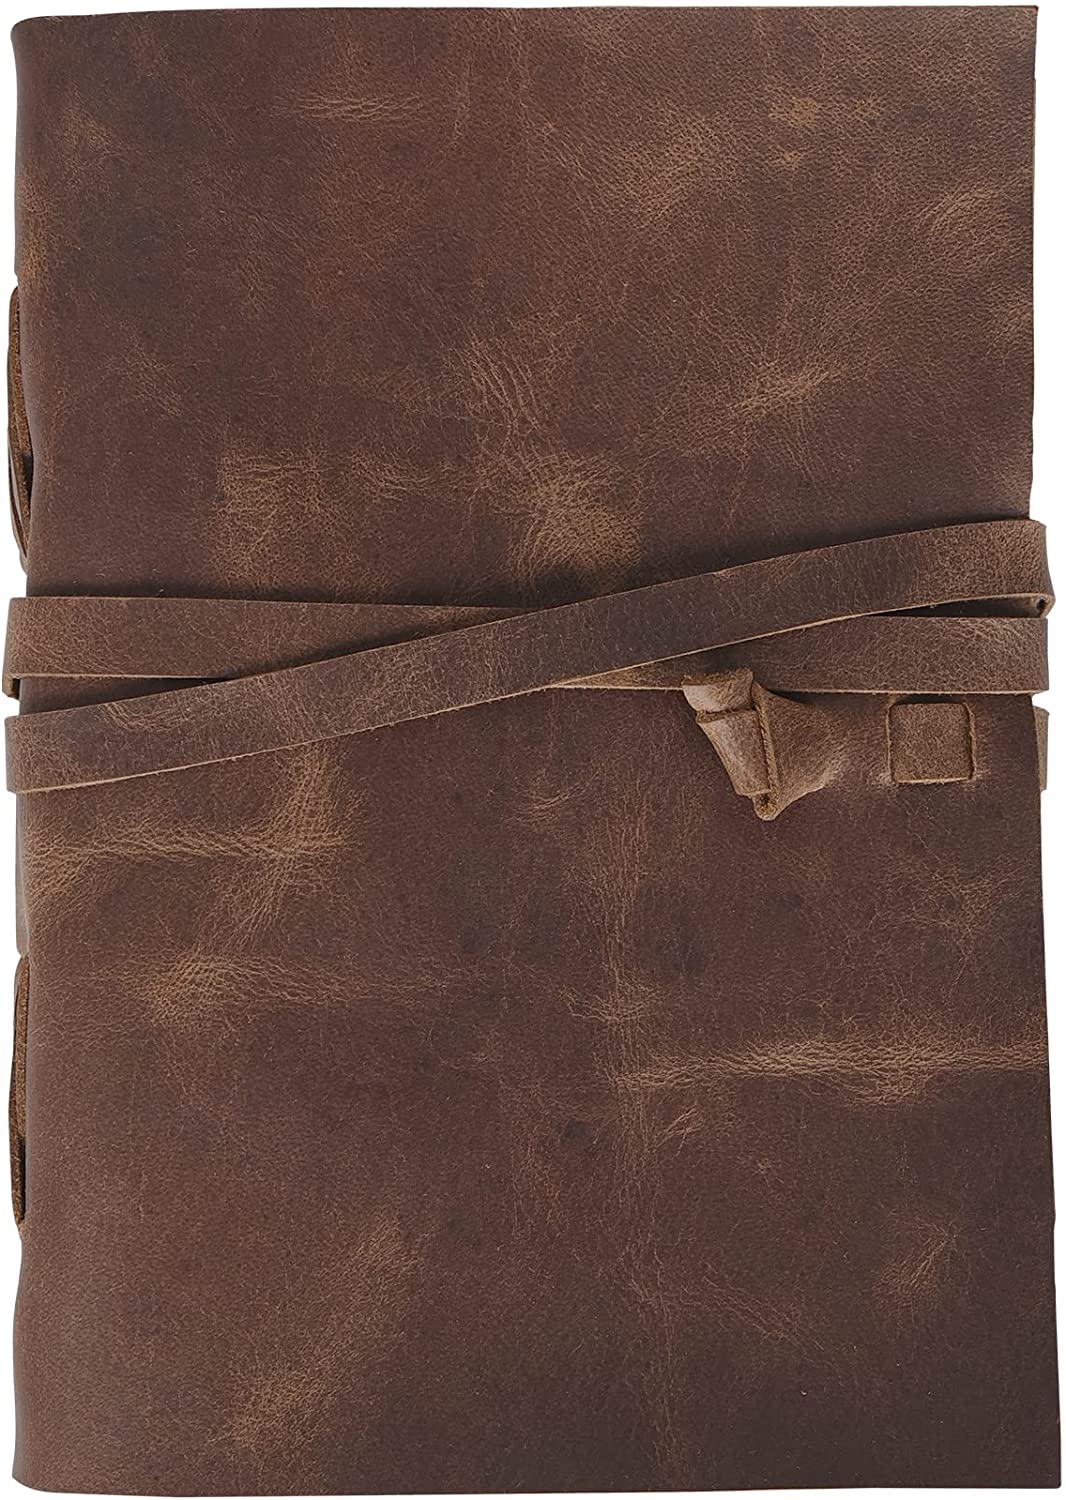 Vintage Leather Journal Blank Deckle Paper - Chestnut (9x7)